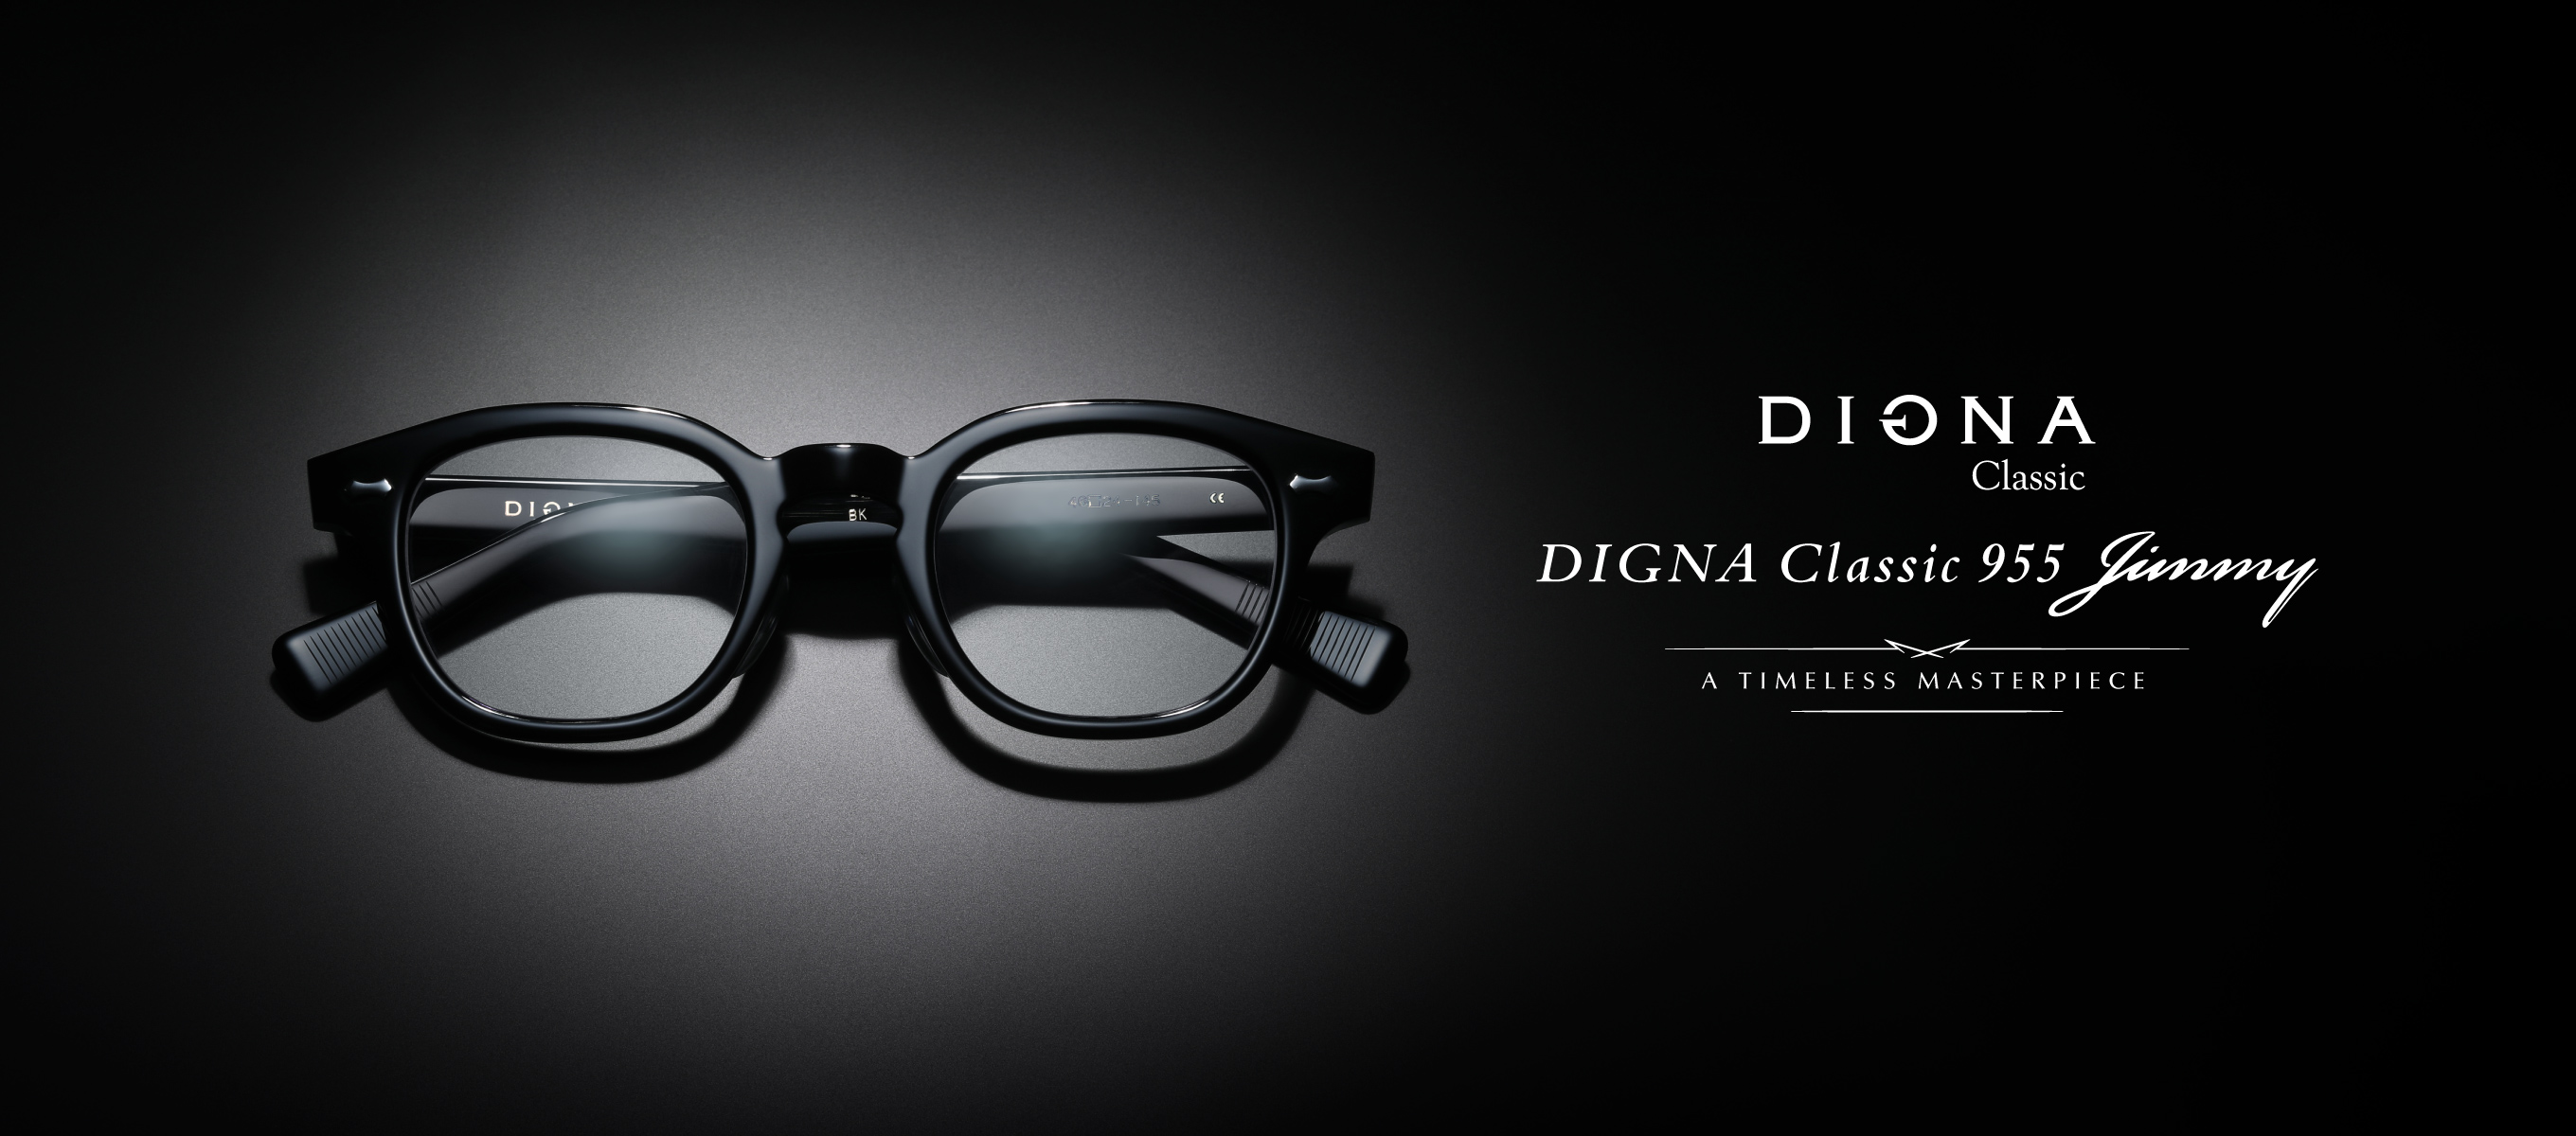 DIGNA Classic ディグナ クラシック | パリミキ(三城)公式通販サイト